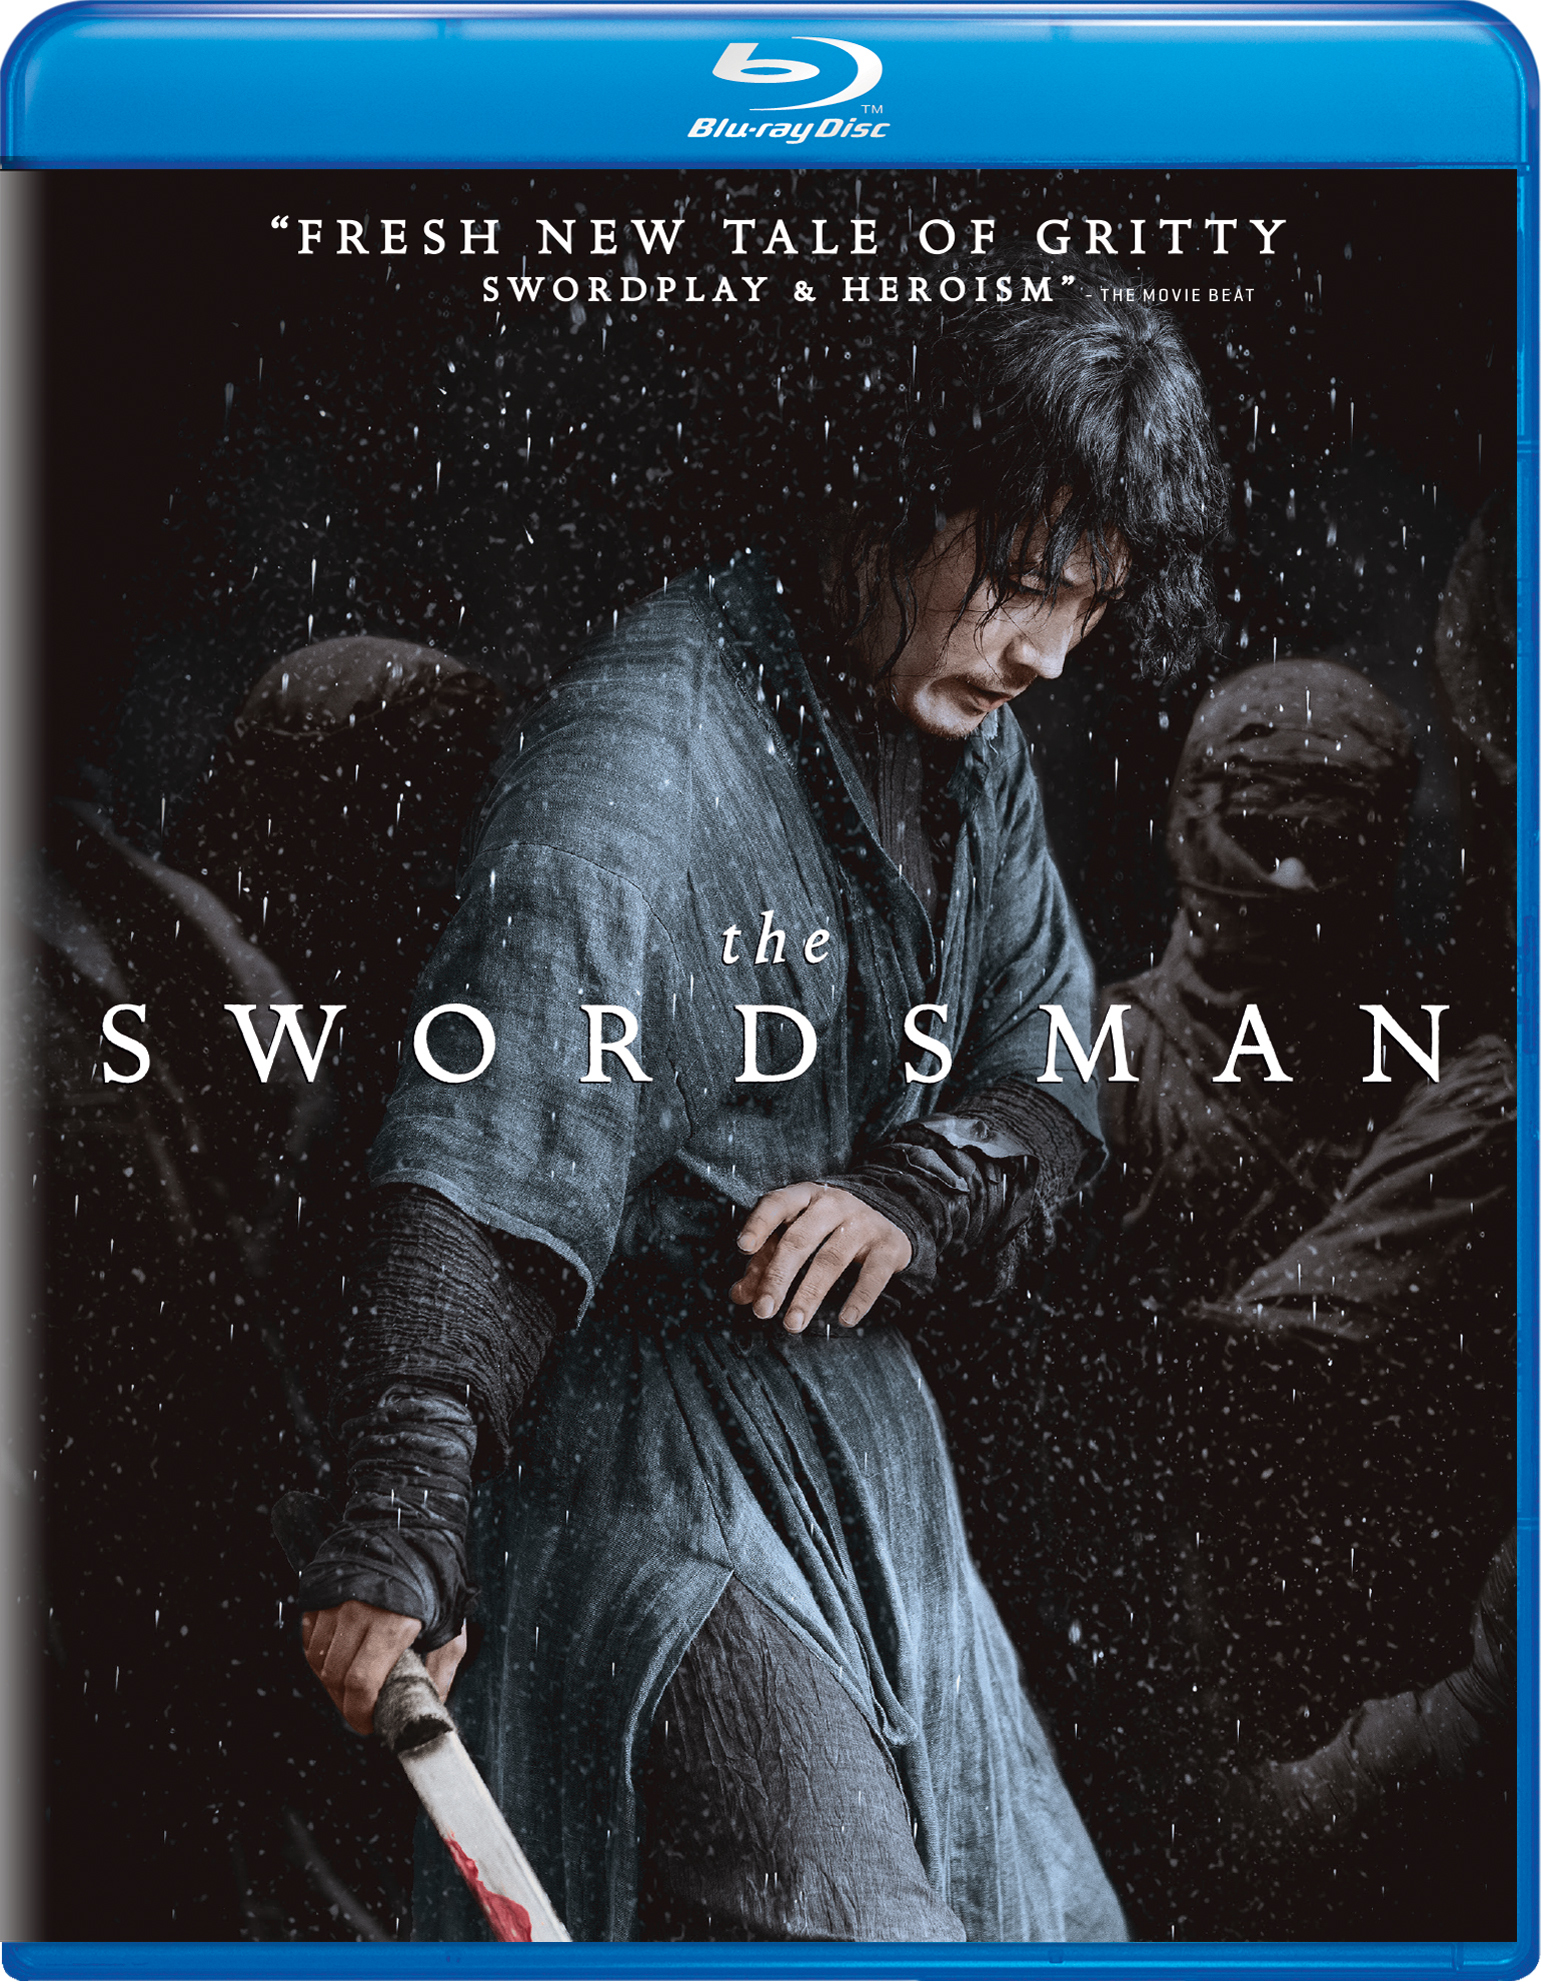 The Swordsman - Blu-ray [ 2020 ]  - Action Movies On Blu-ray - Movies On GRUV